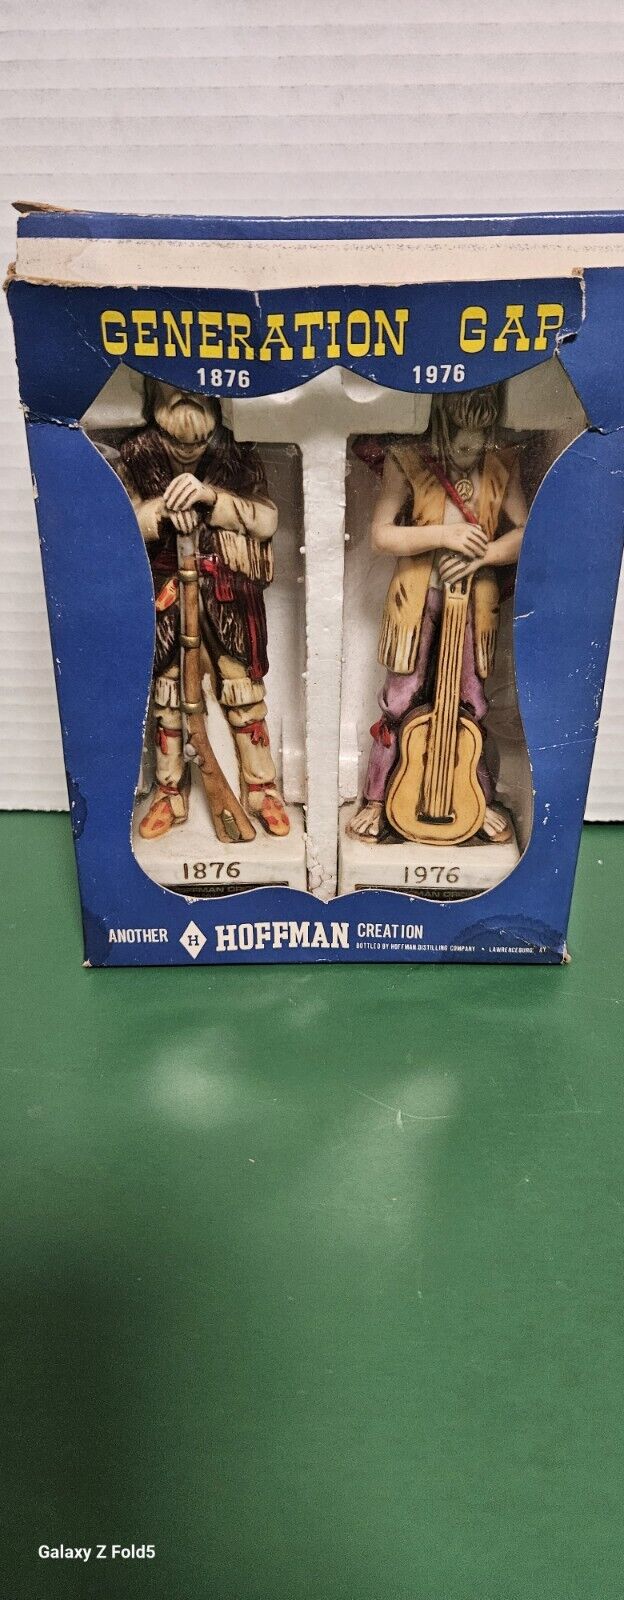 Vintage Hoffman Generation Gap Decanters 1876-1976 Set Of 2 Still In Box...